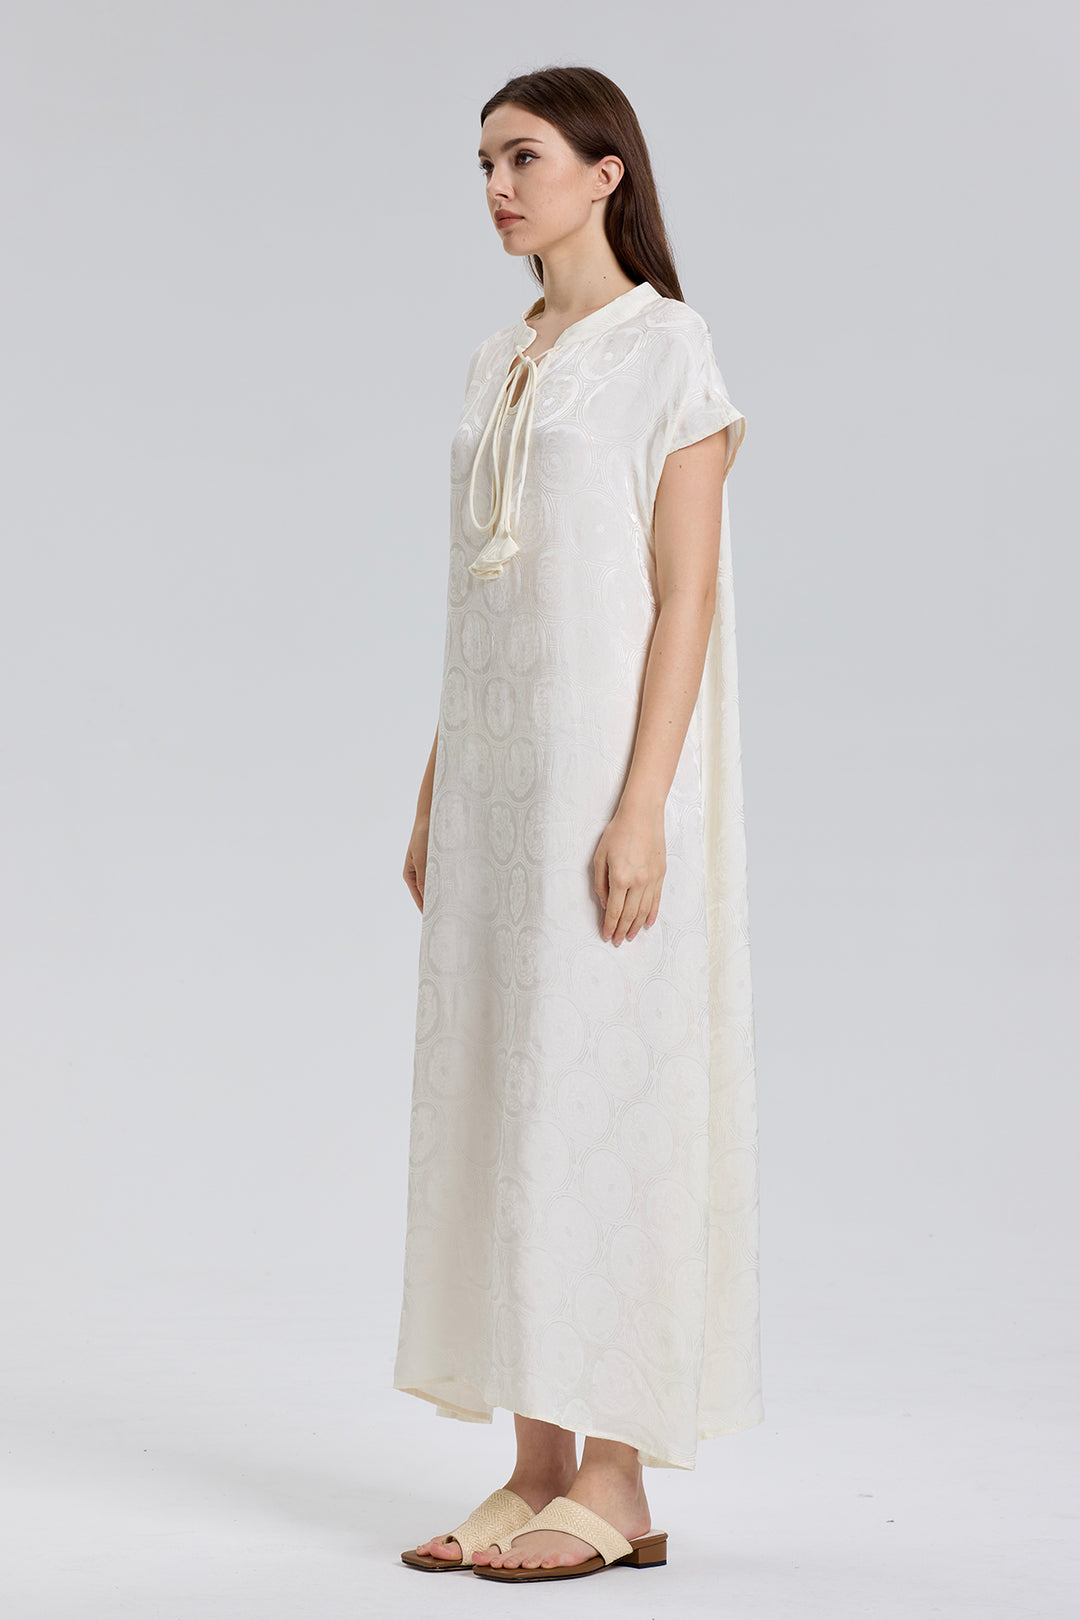 Rumi jacquard Retro Elegant Maxi Dress